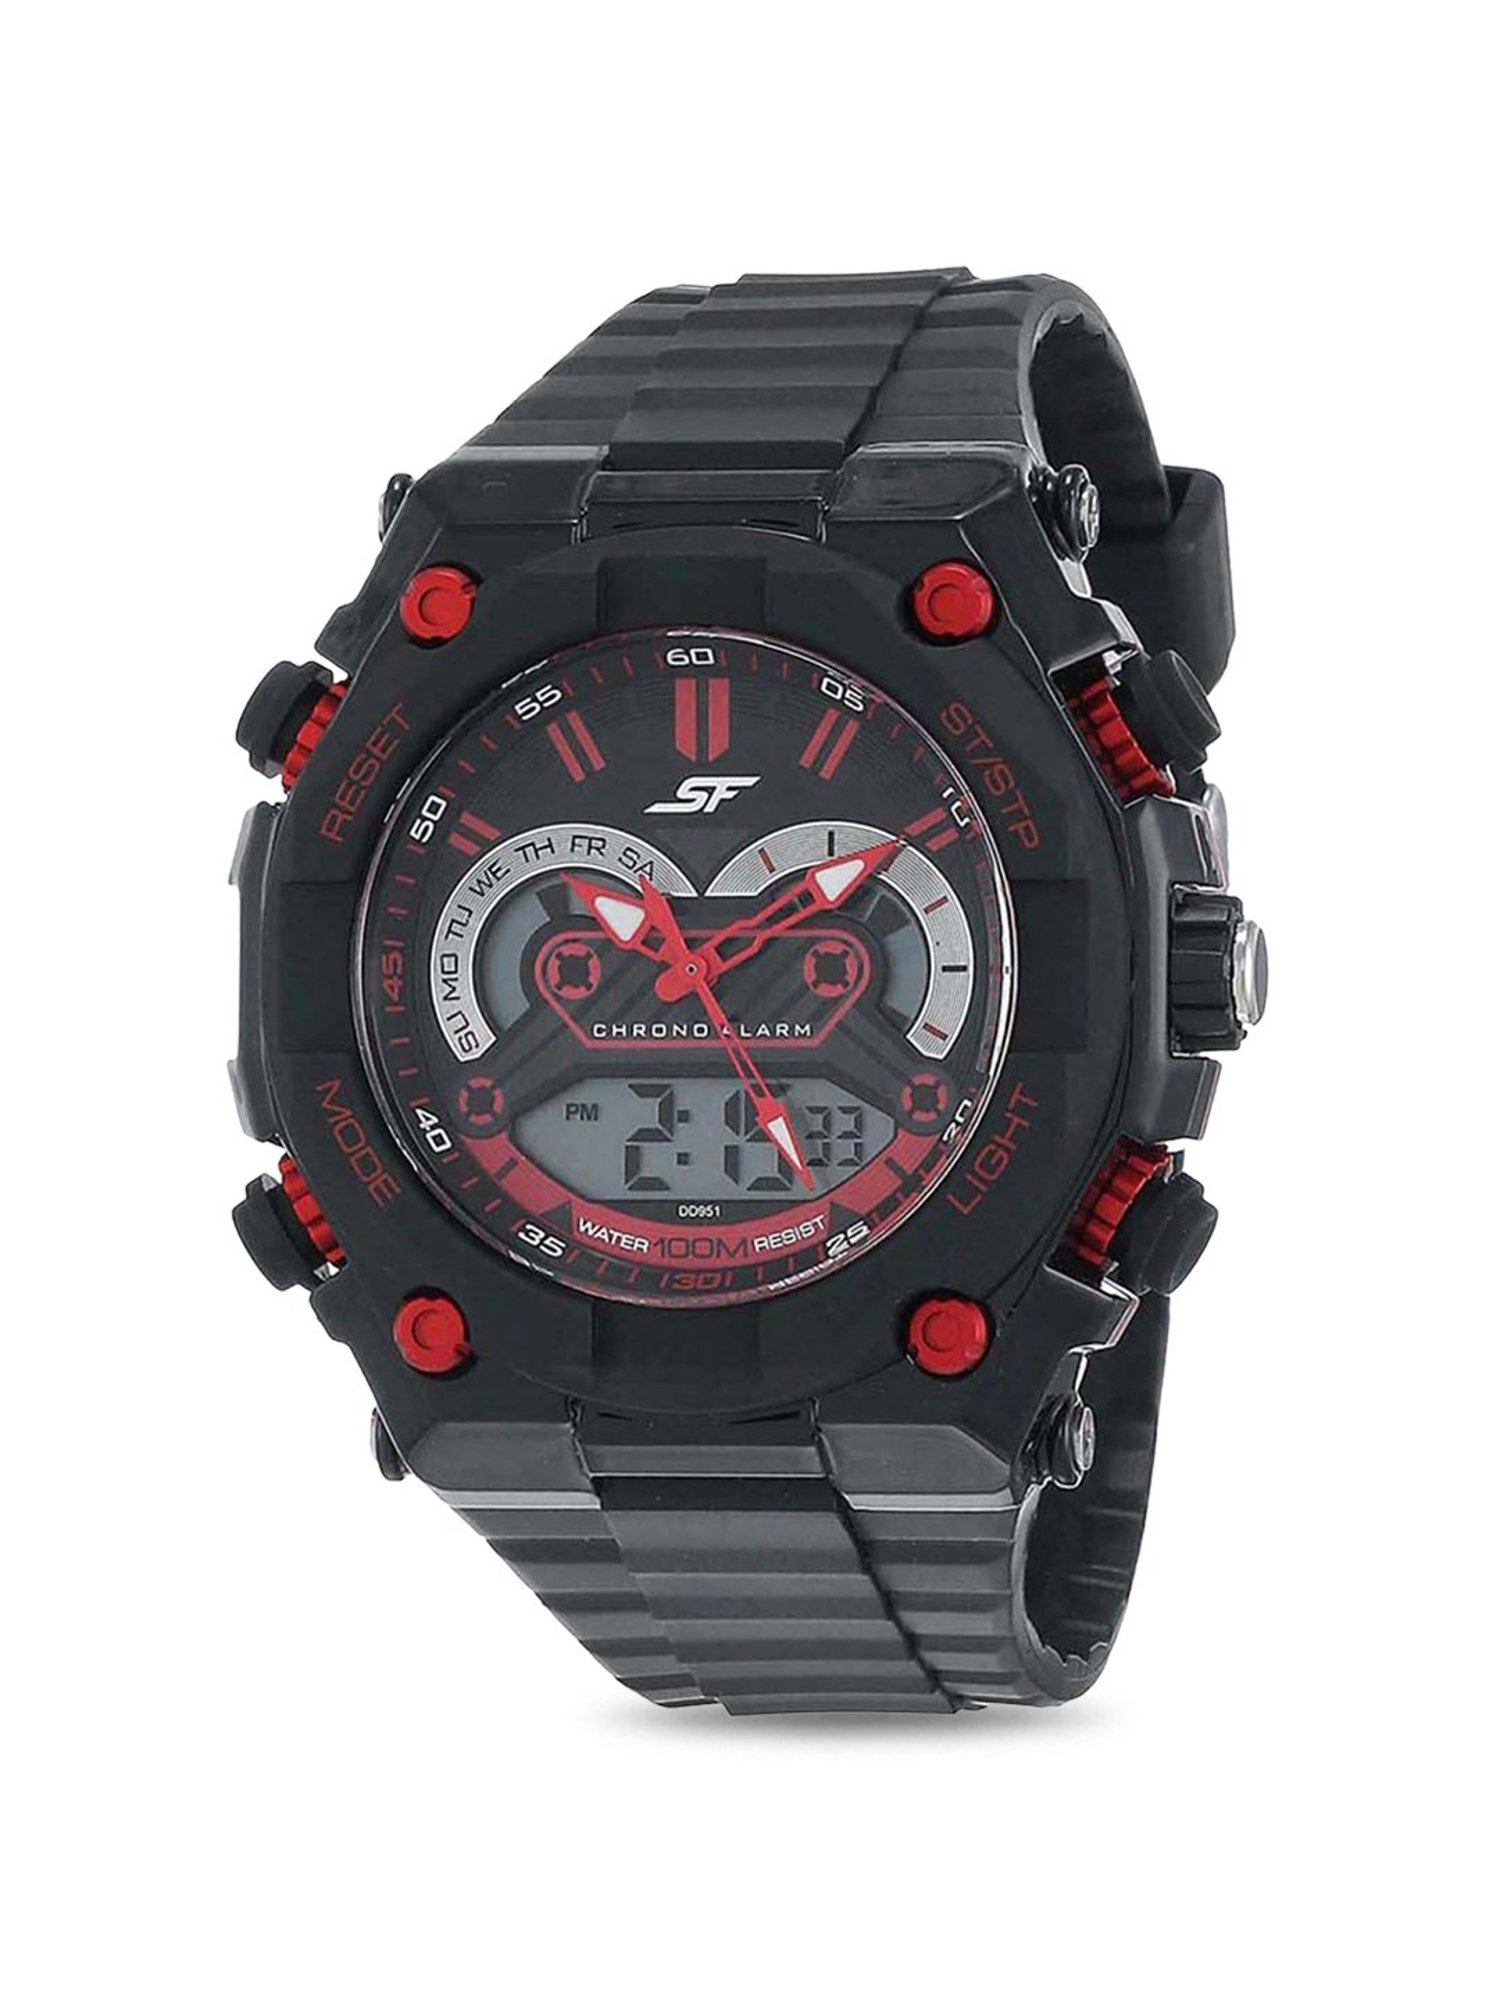 Sonata White Dial Analog watch For Men-NR7921PP15 : Amazon.in: Fashion